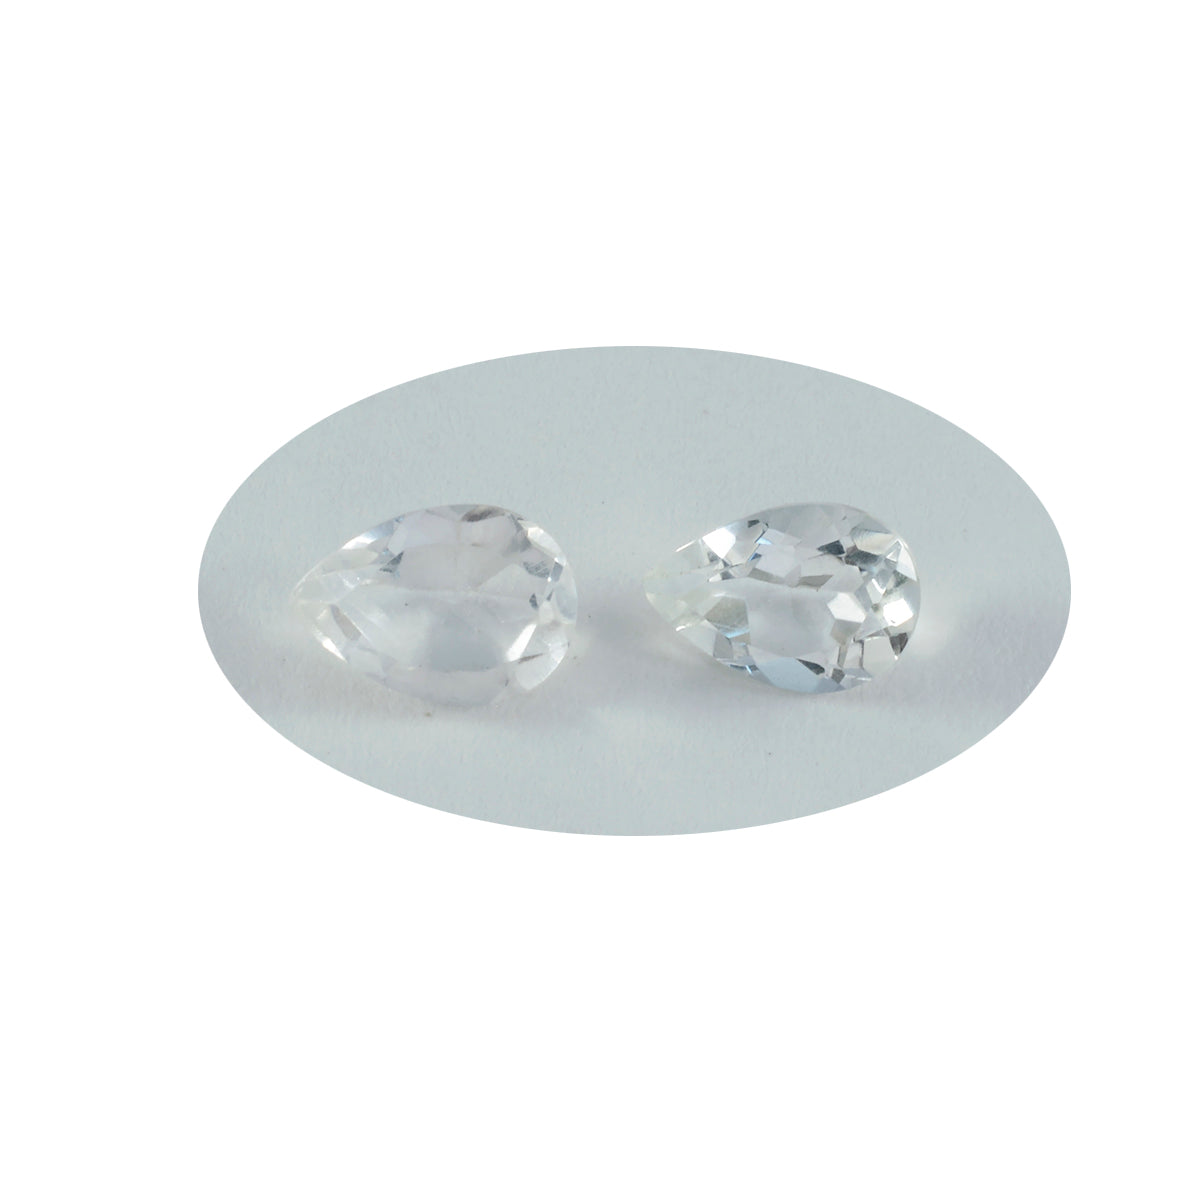 Riyogems 1PC White Crystal Quartz Faceted 8x12 mm Pear Shape wonderful Quality Loose Gem